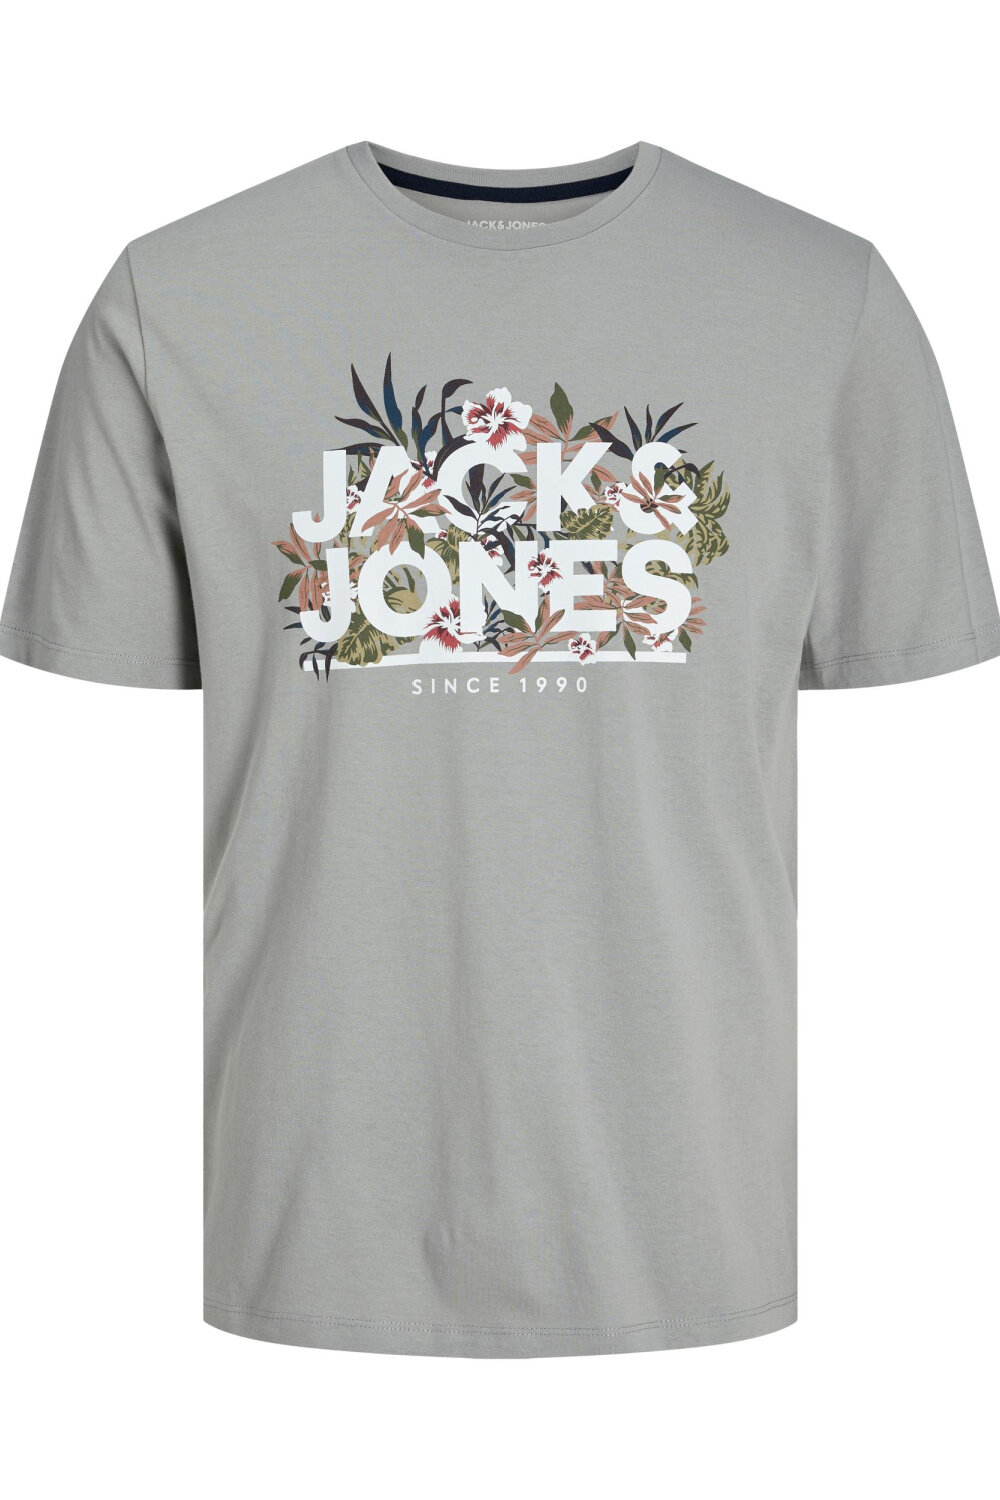 Jack & Jones t-shirt mod.jjchill shape tee(3 colours)